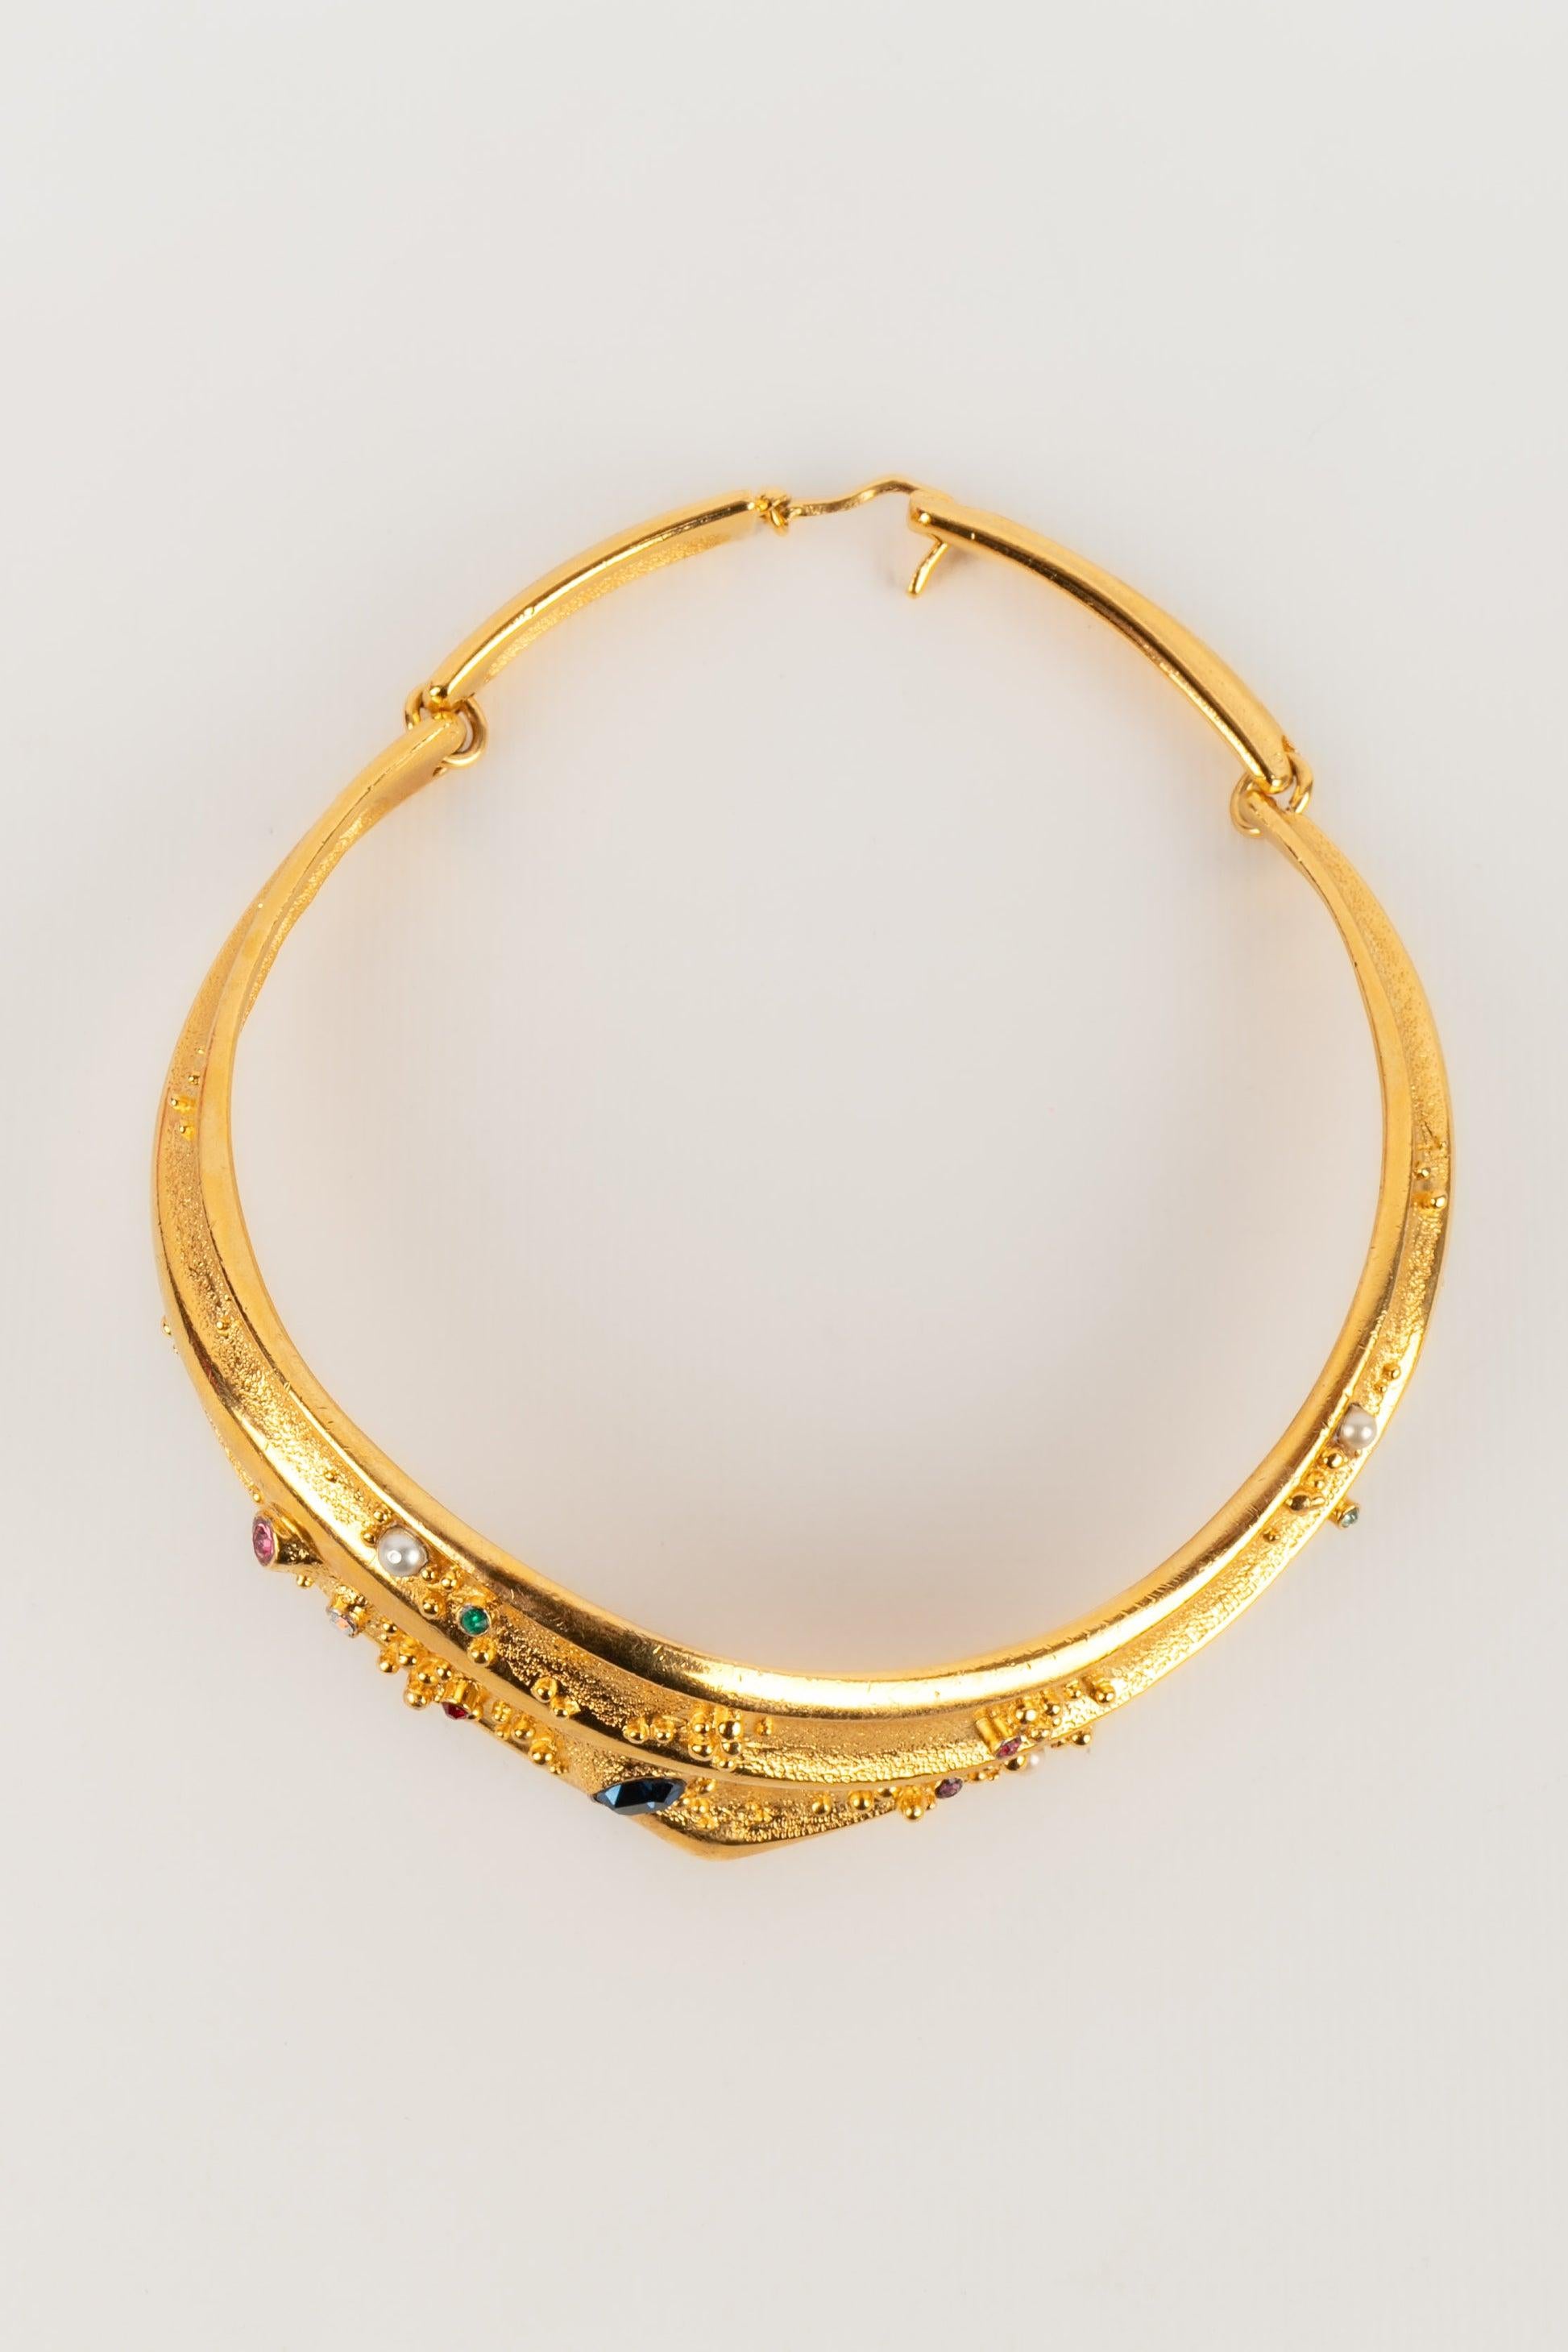 Christian Lacroix Golden Metal Short Necklace with Rhinestones  In Excellent Condition For Sale In SAINT-OUEN-SUR-SEINE, FR